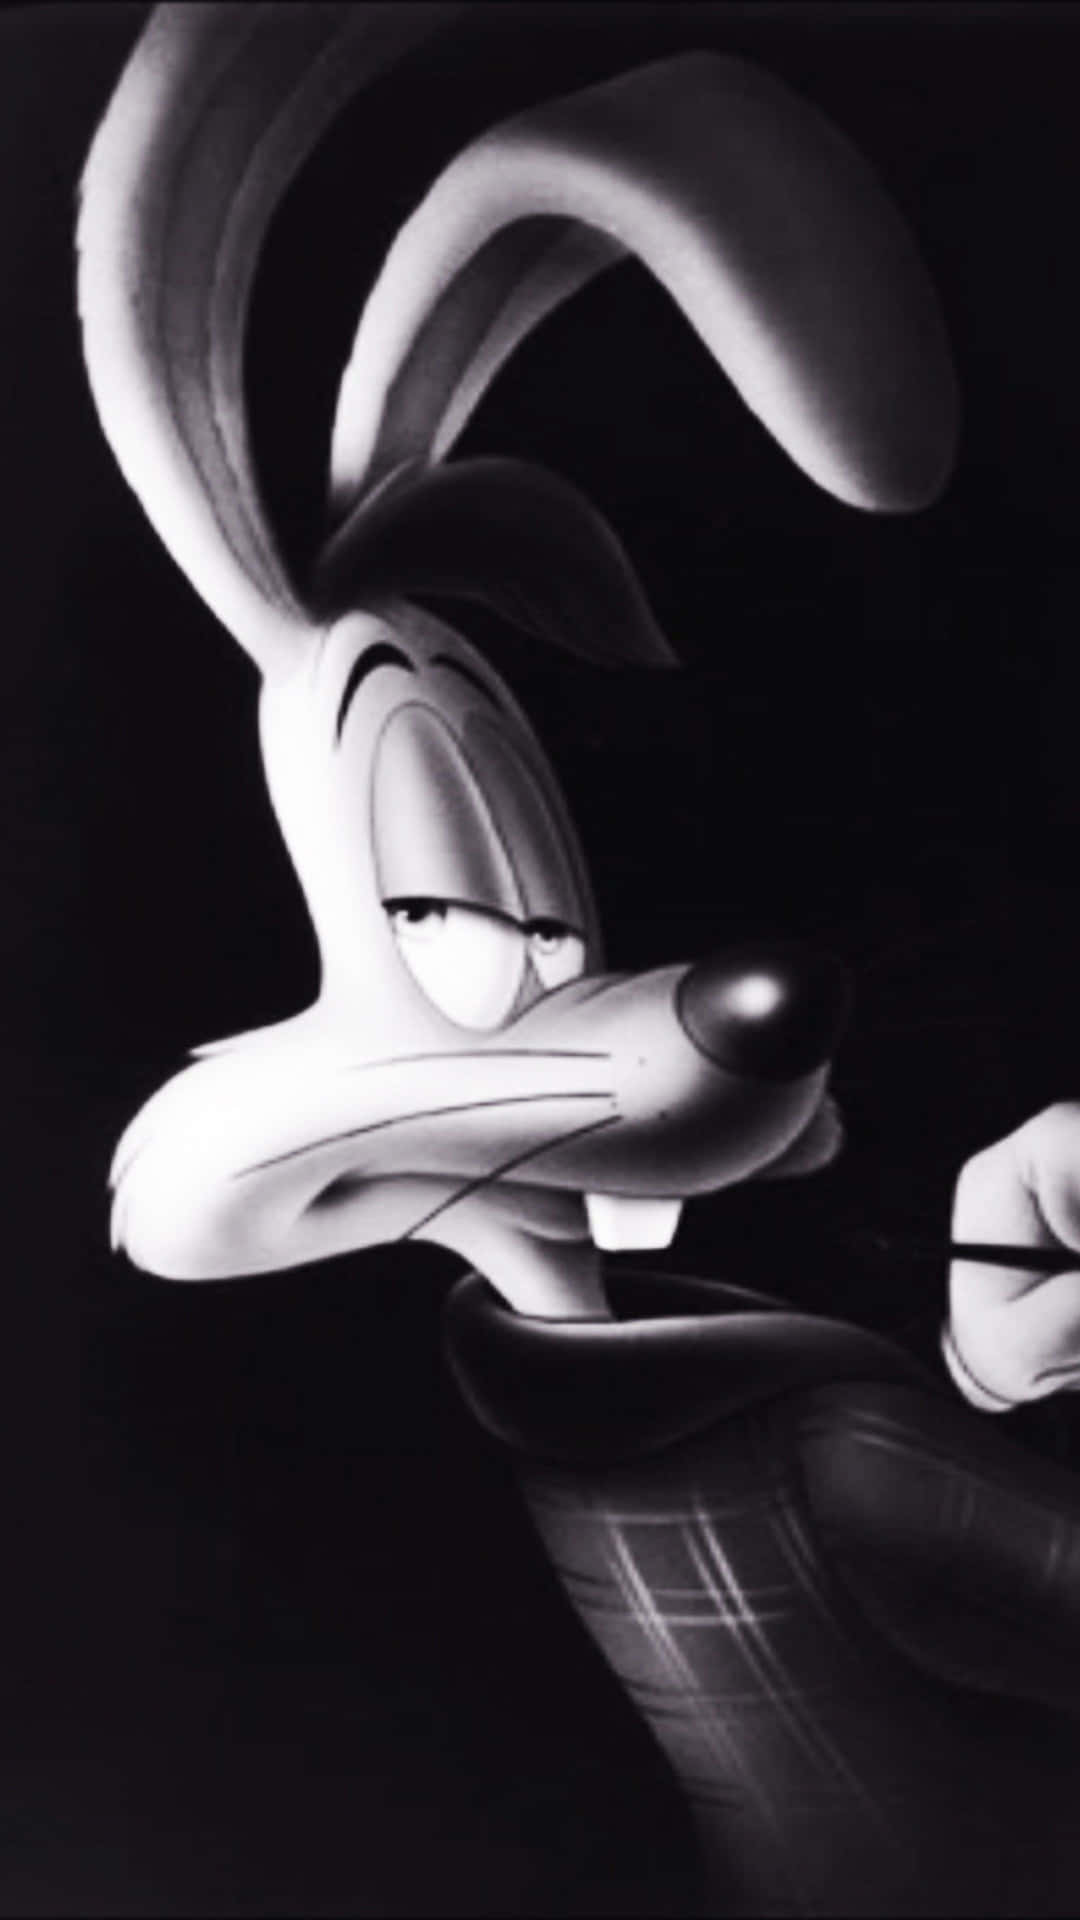 Roger Rabbit Monochrome Portrait Background